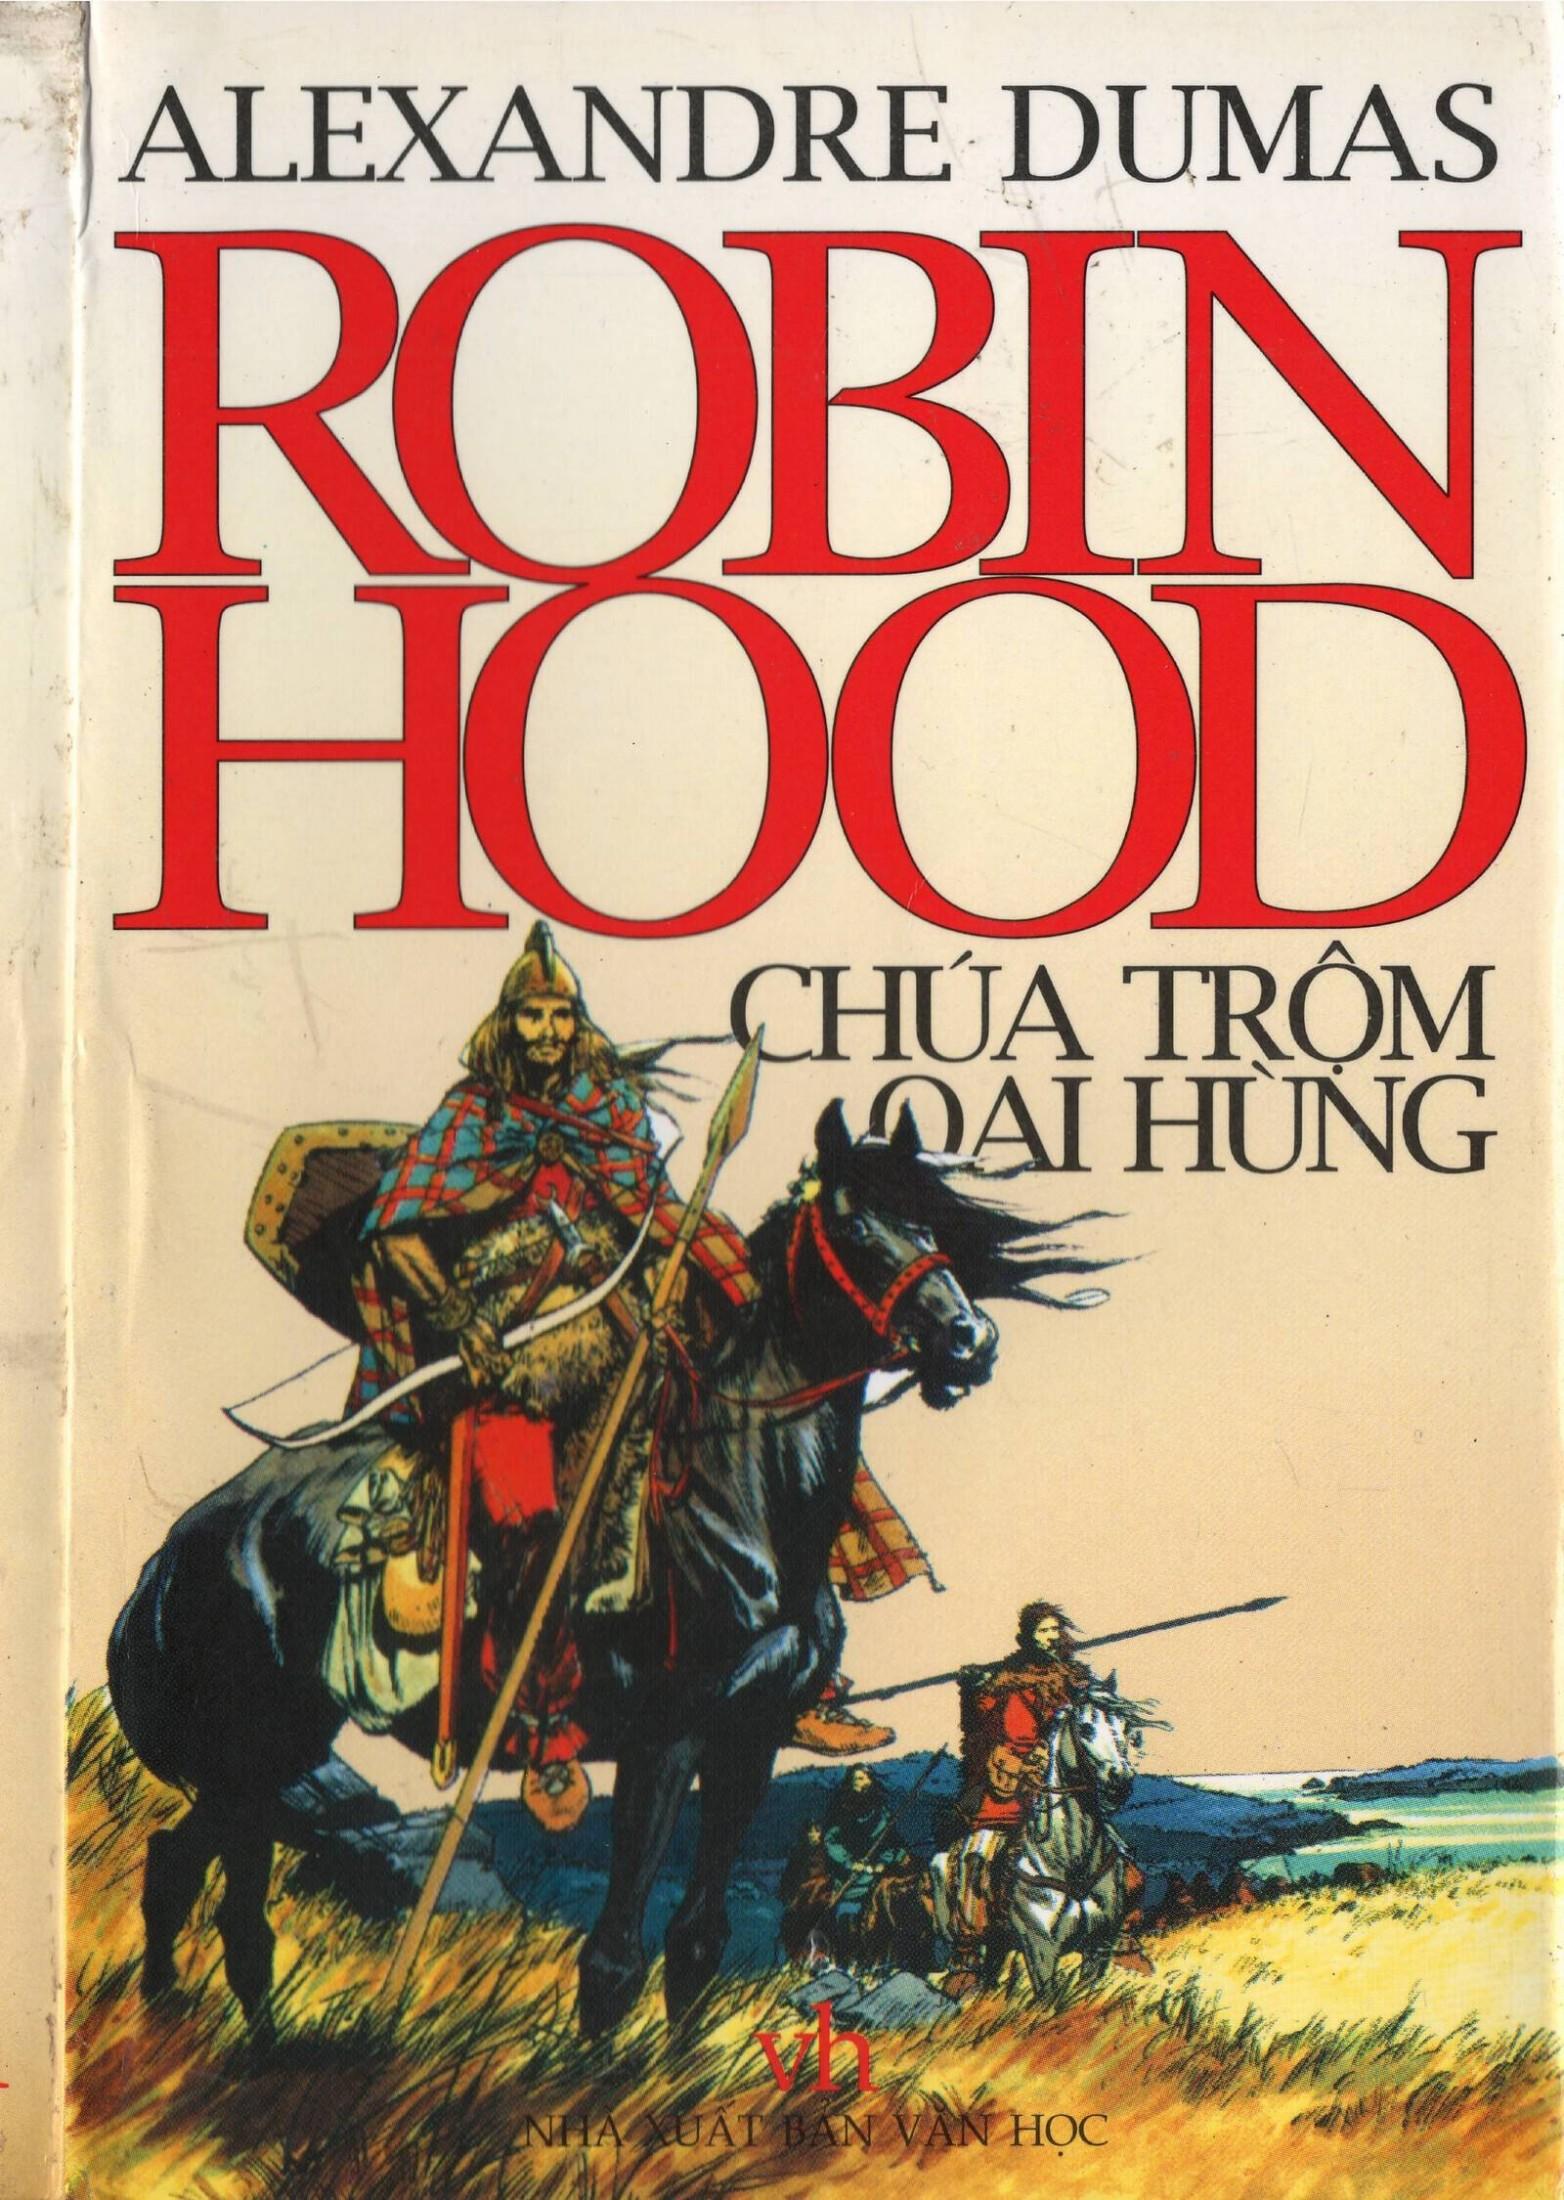 Robin Hood Chúa Trộm Oai Hùng Ebook Pdf – Epub – Azw3 – Mobi